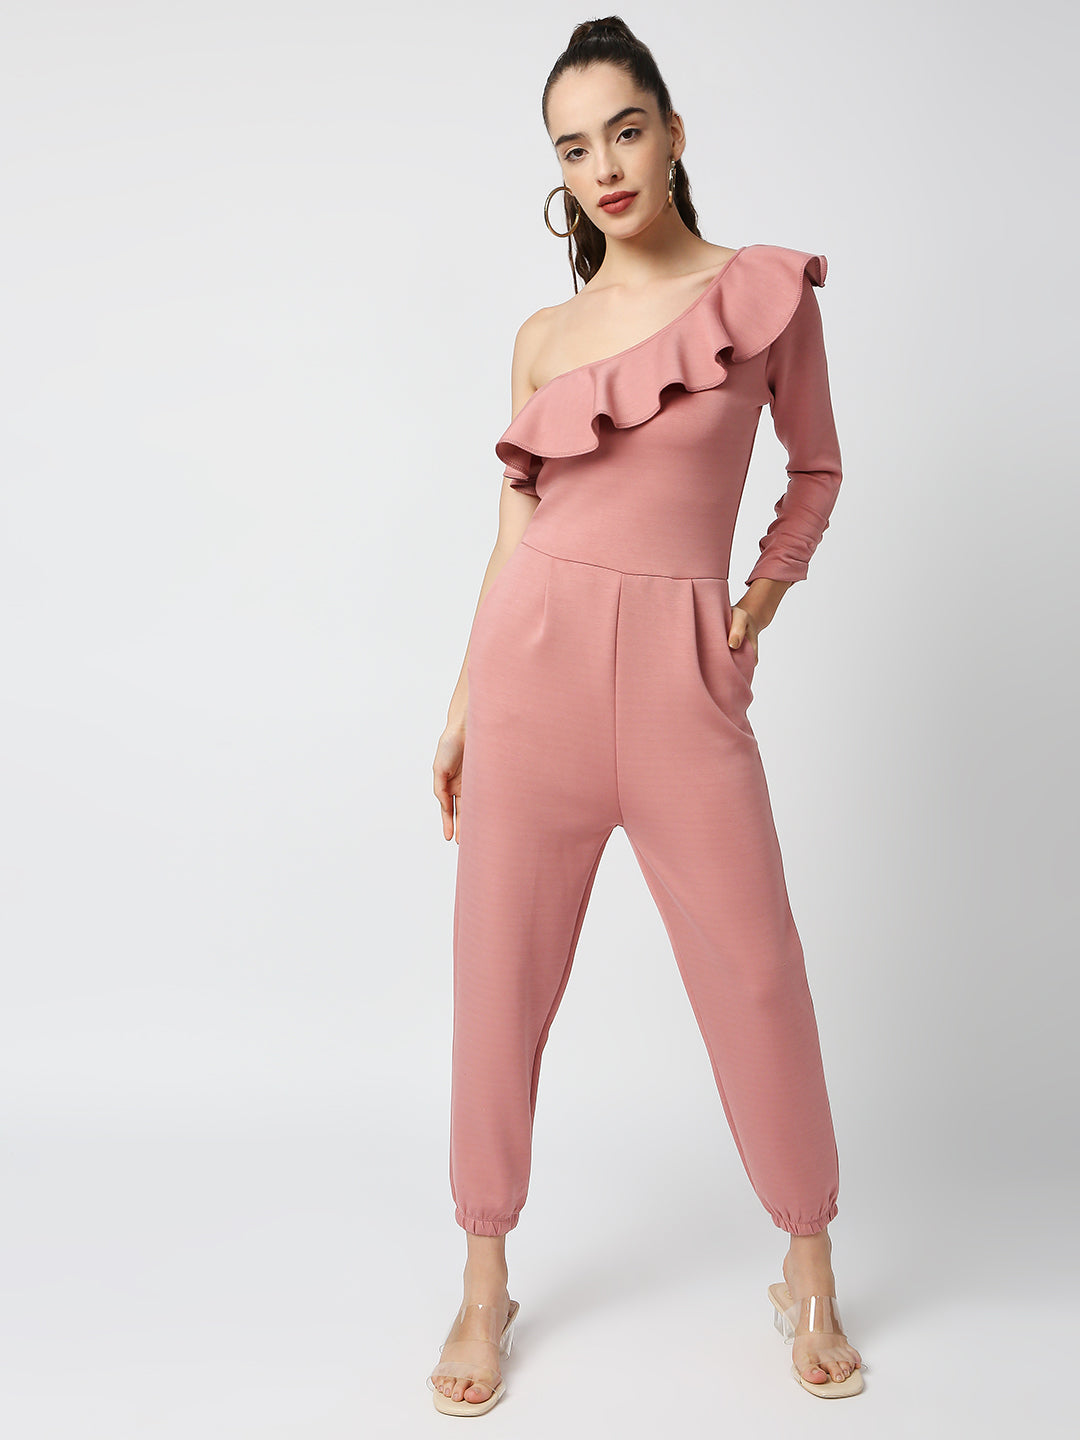 Buy Blamblack Women's Powder Pink Color Frill One Side Shoulder Jumpsuit